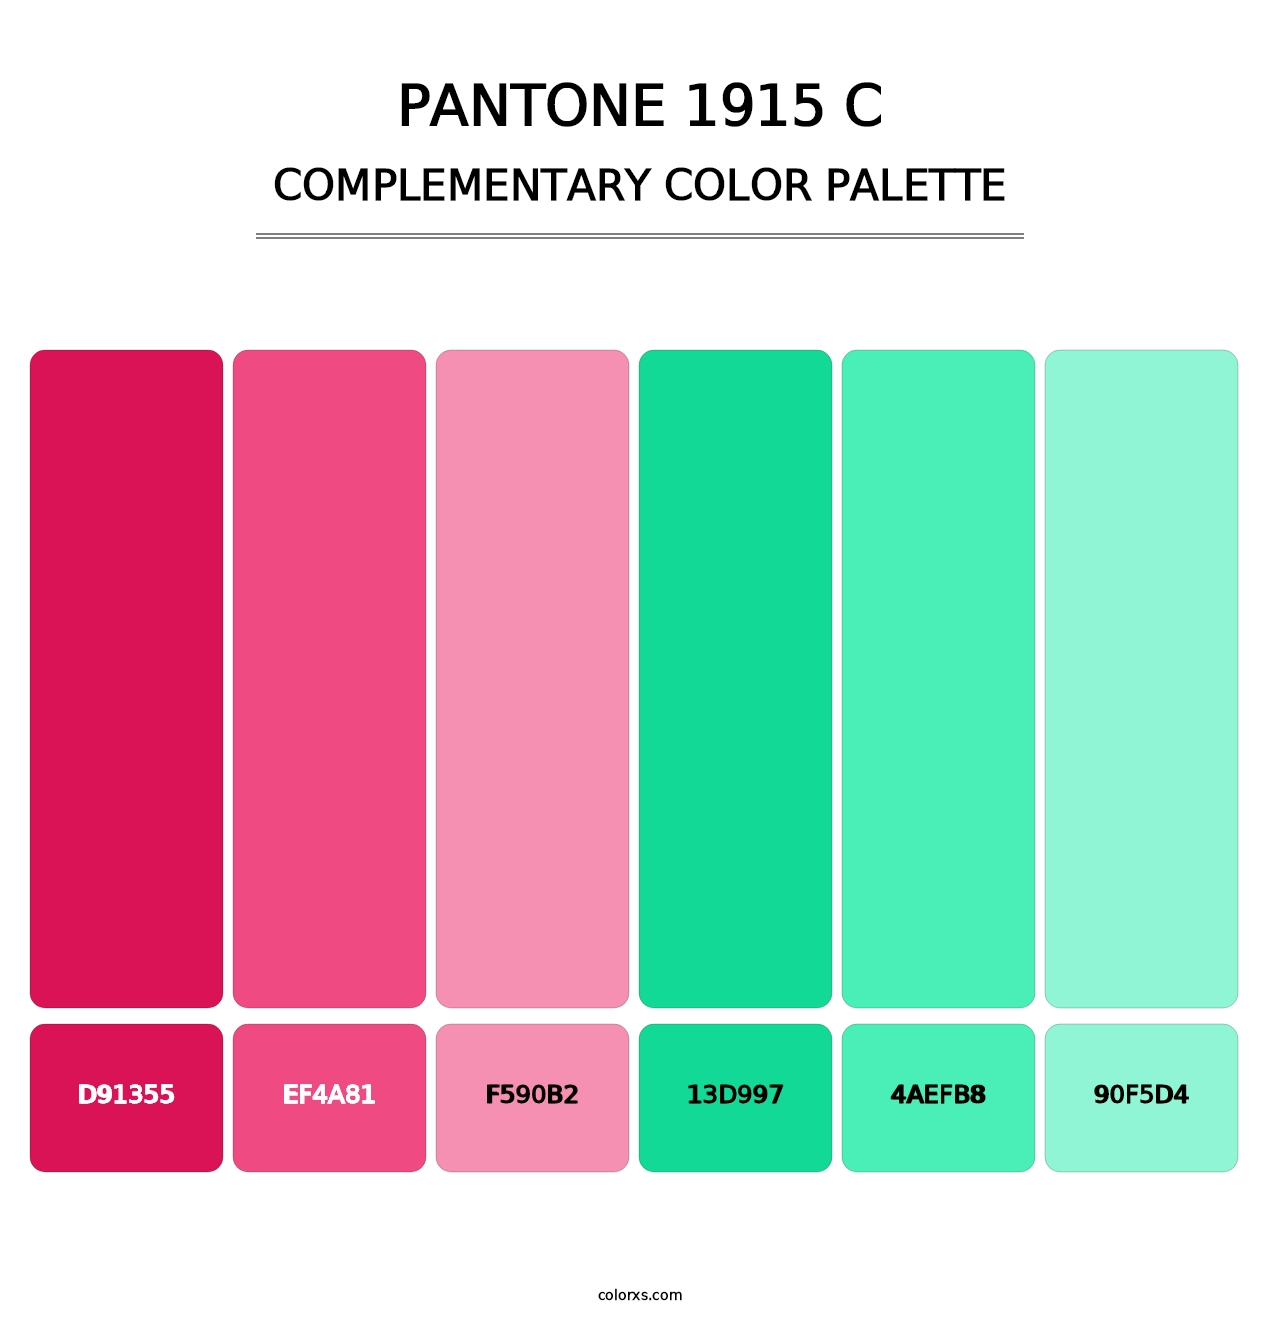 PANTONE 1915 C - Complementary Color Palette